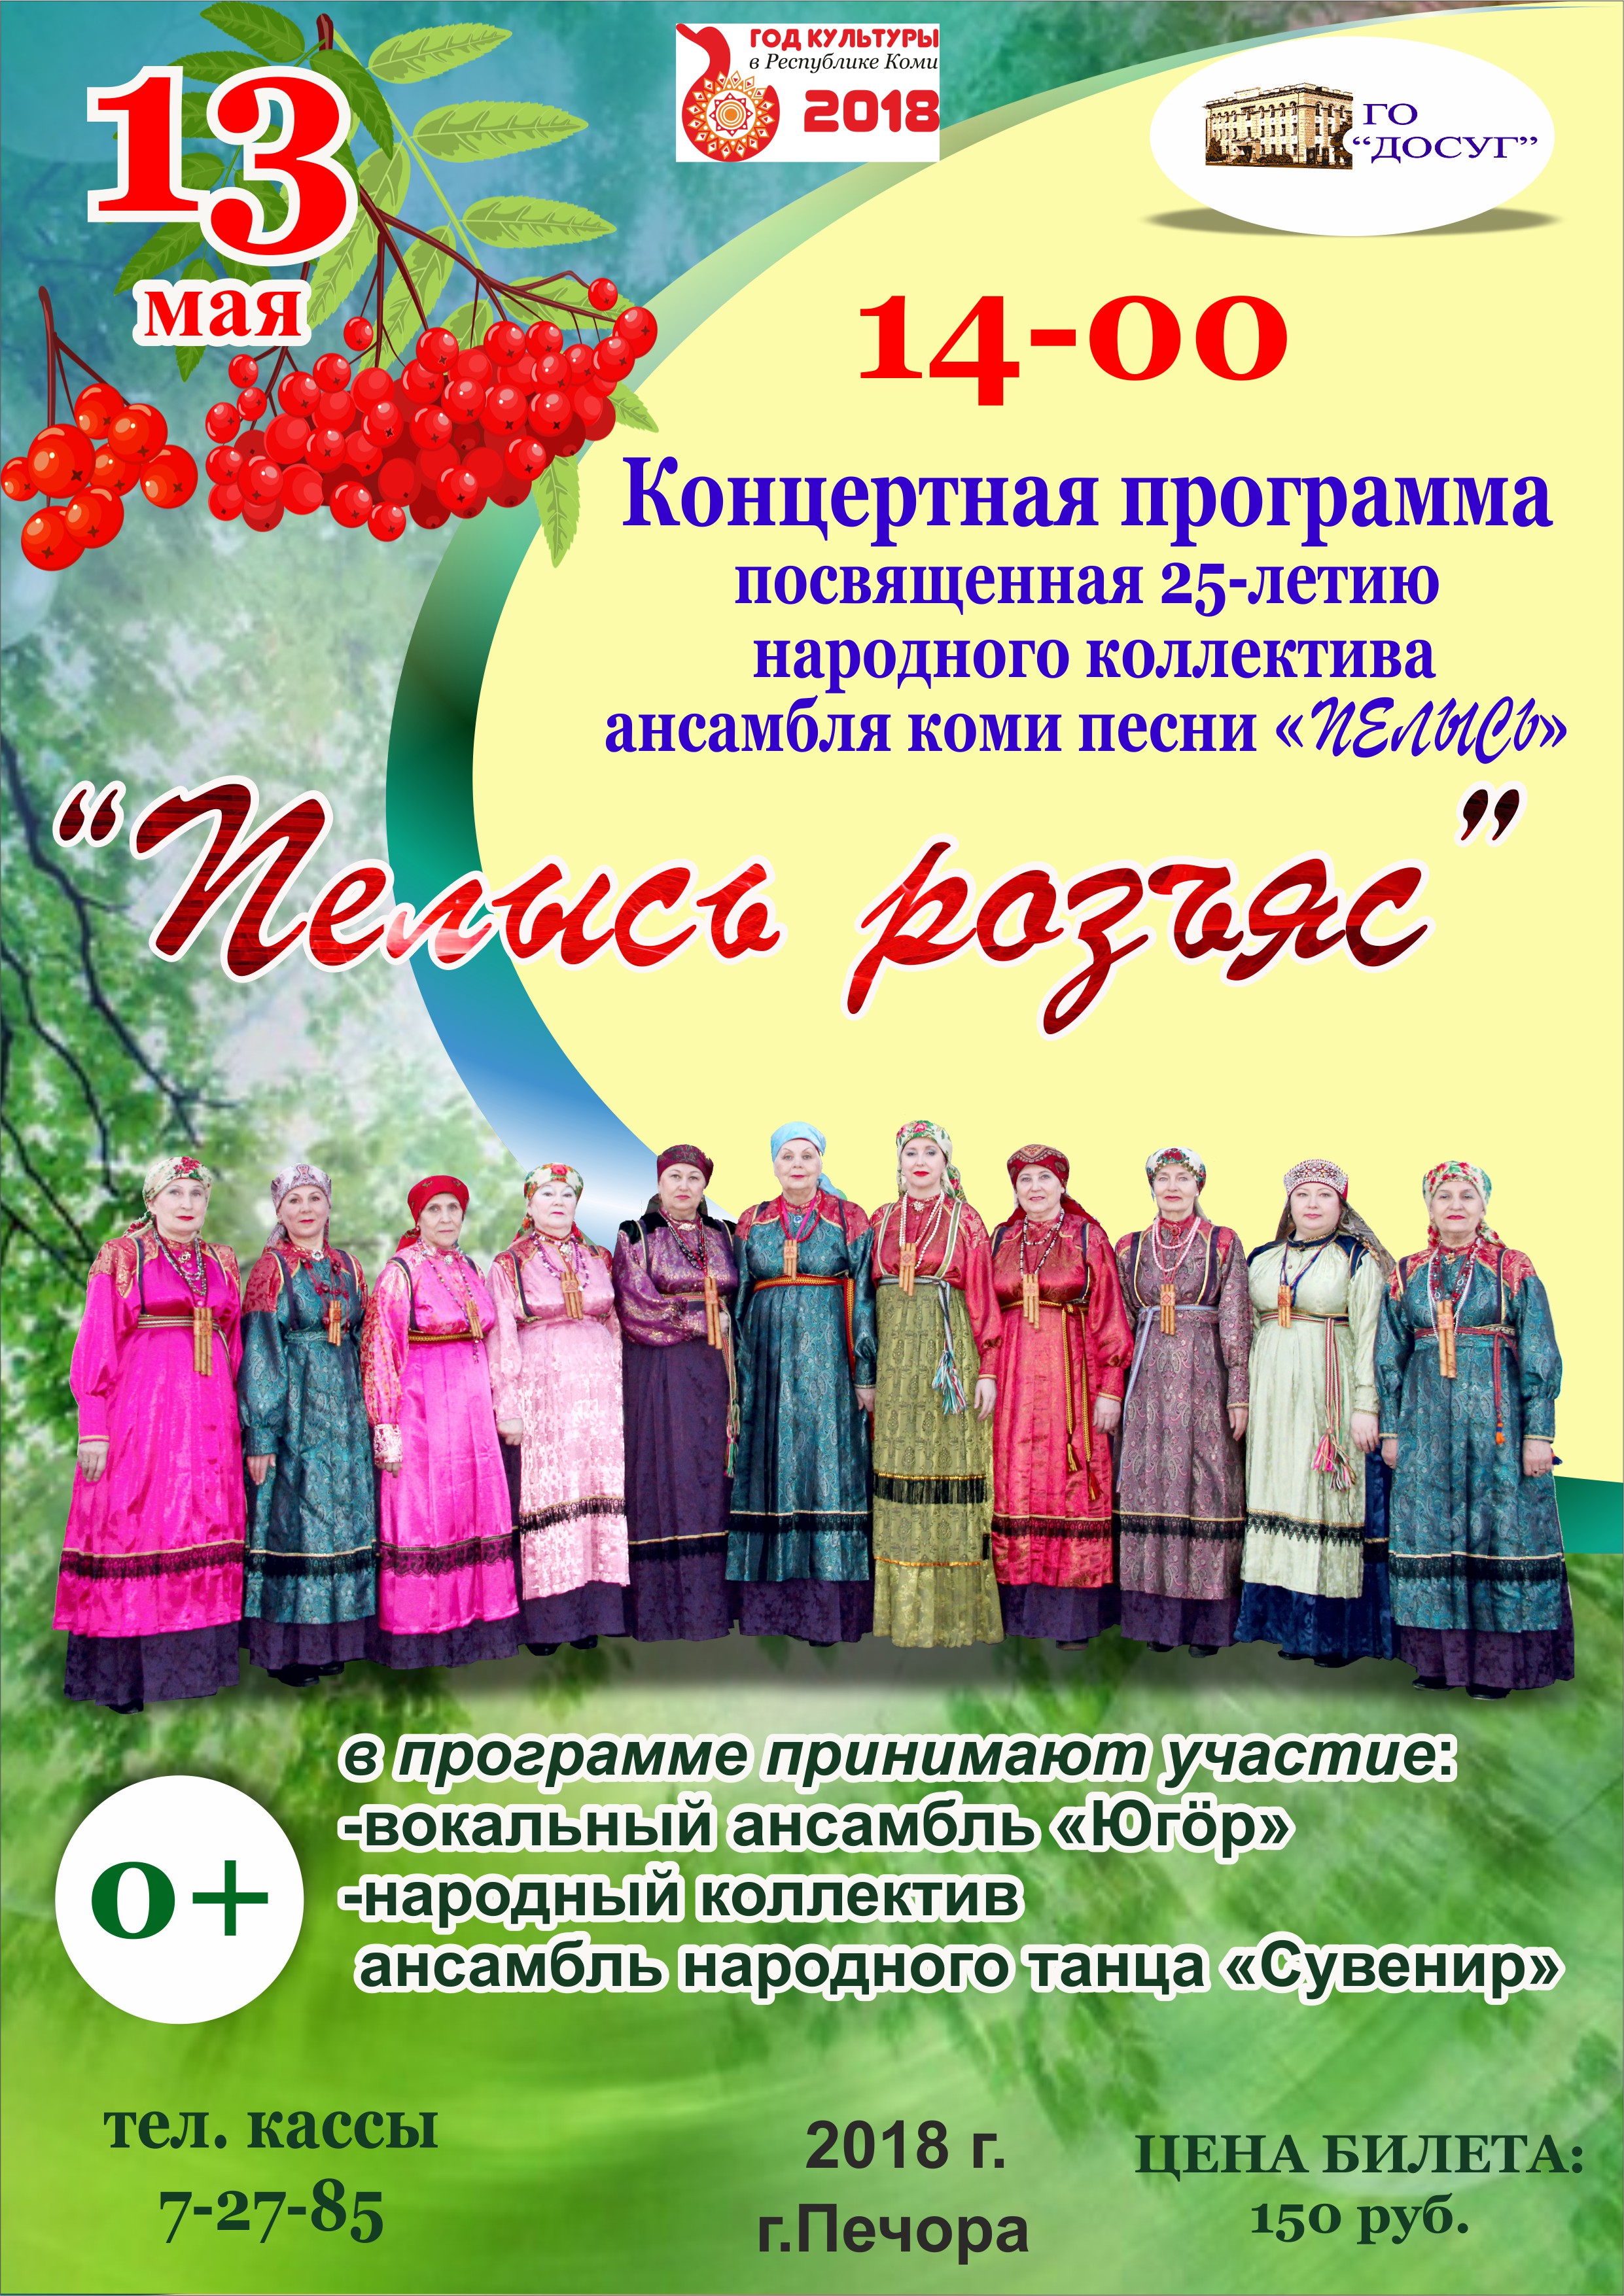 25-летию народного коллектива ансамбля коми песни “Пелысь”